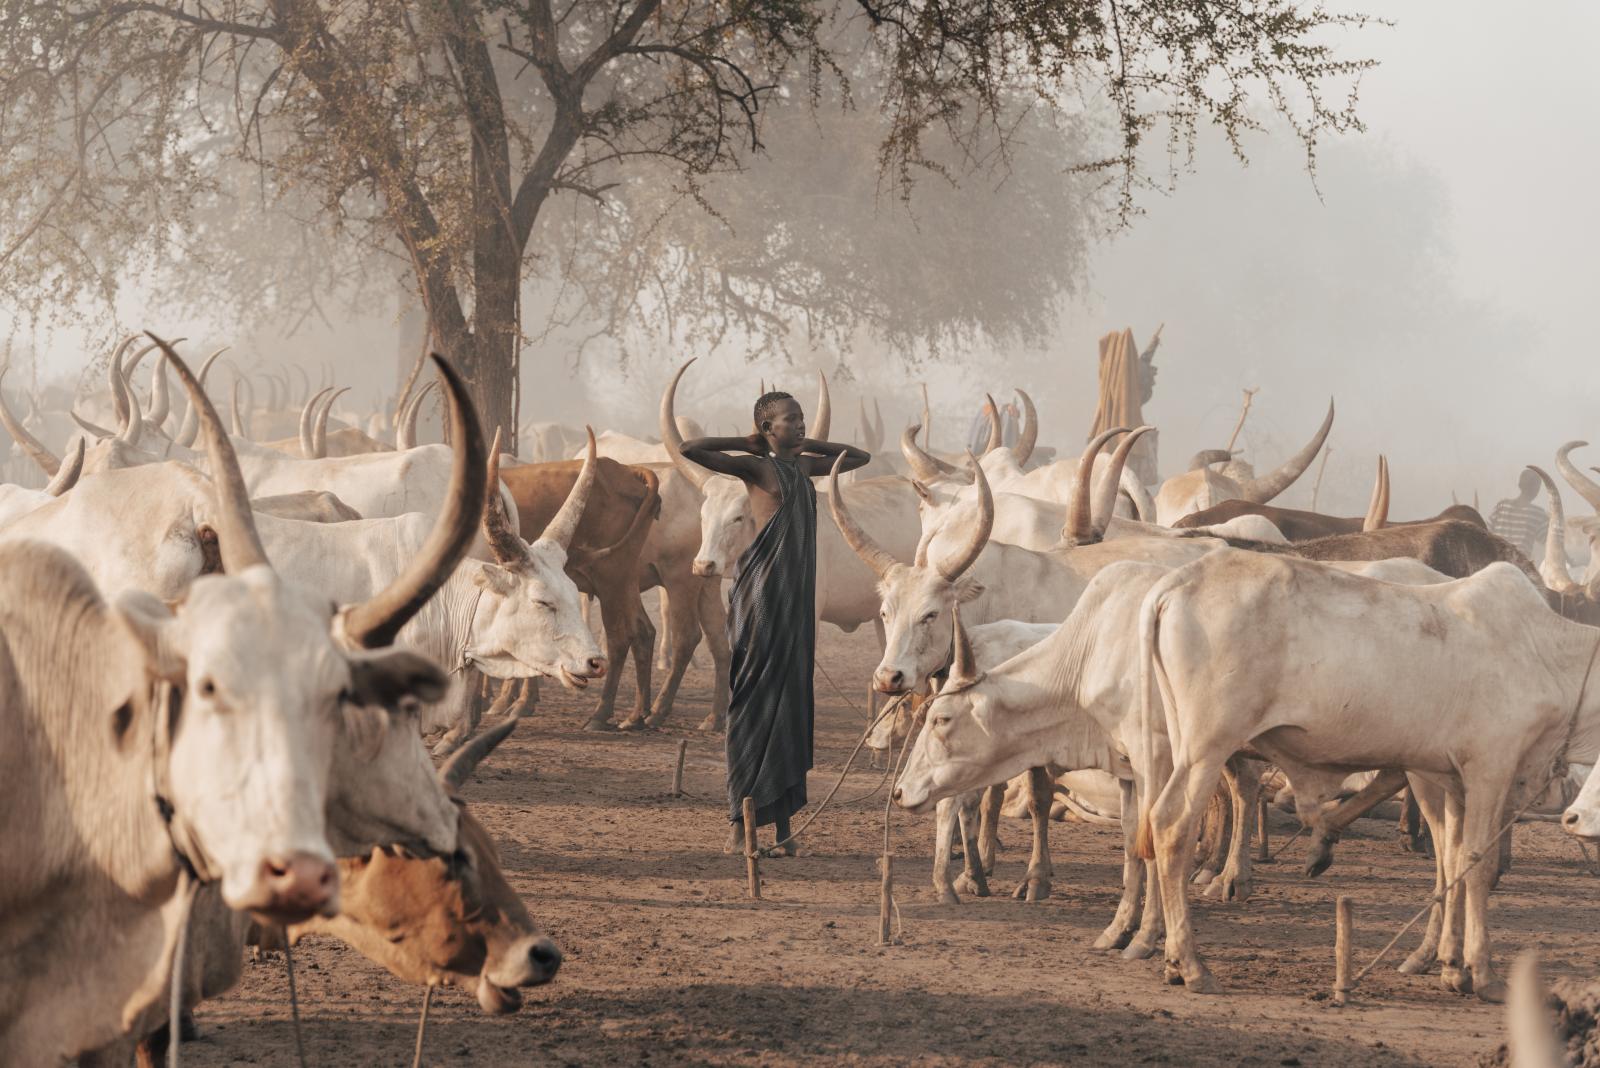 Mundari cattle camp, south Sudan